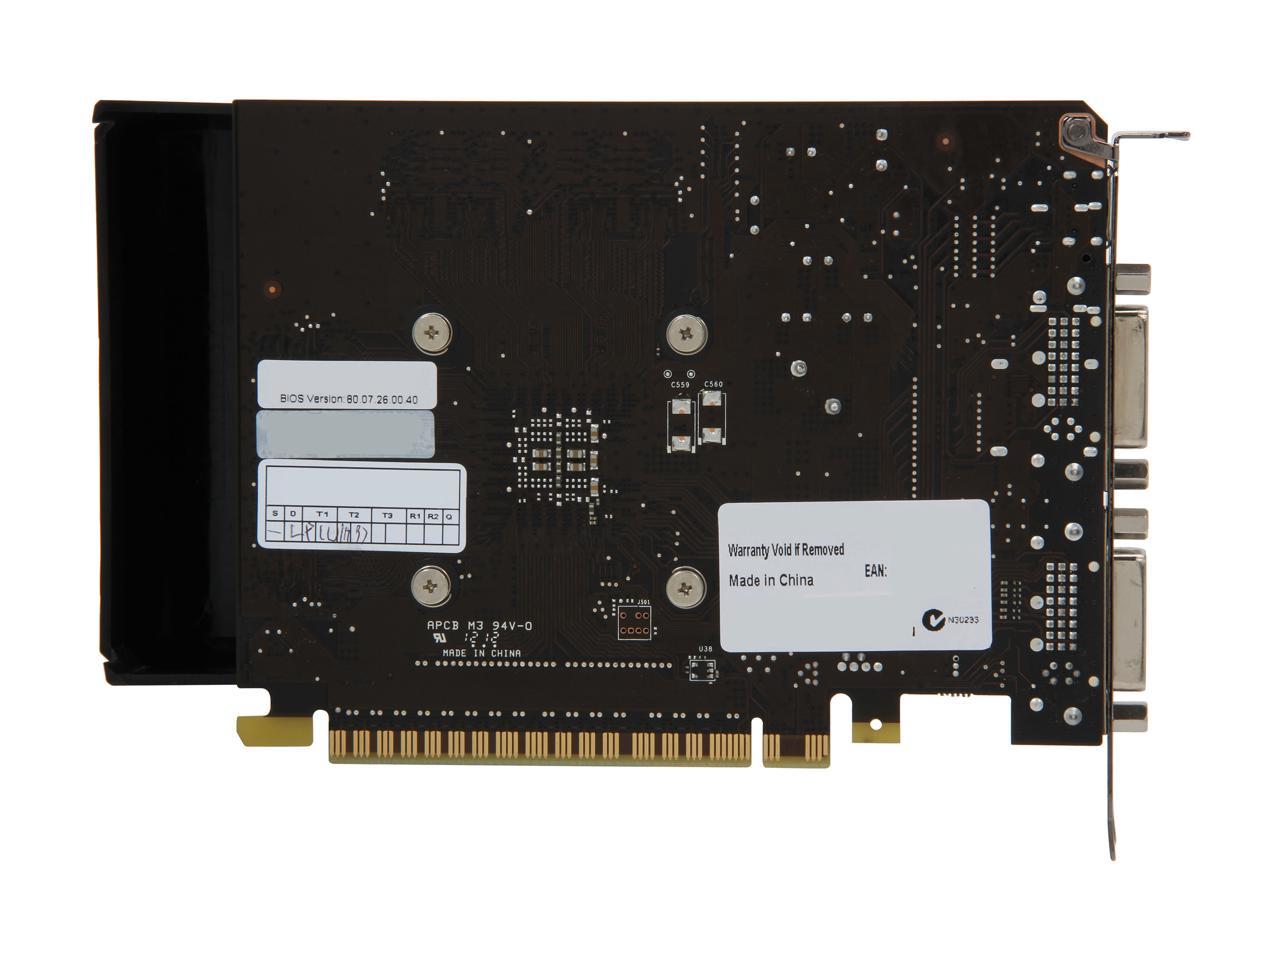 EVGA GeForce GT 640 2GB DDR3 PCI Express 3.0 x16 Video Card 02G-P4-2643-KR